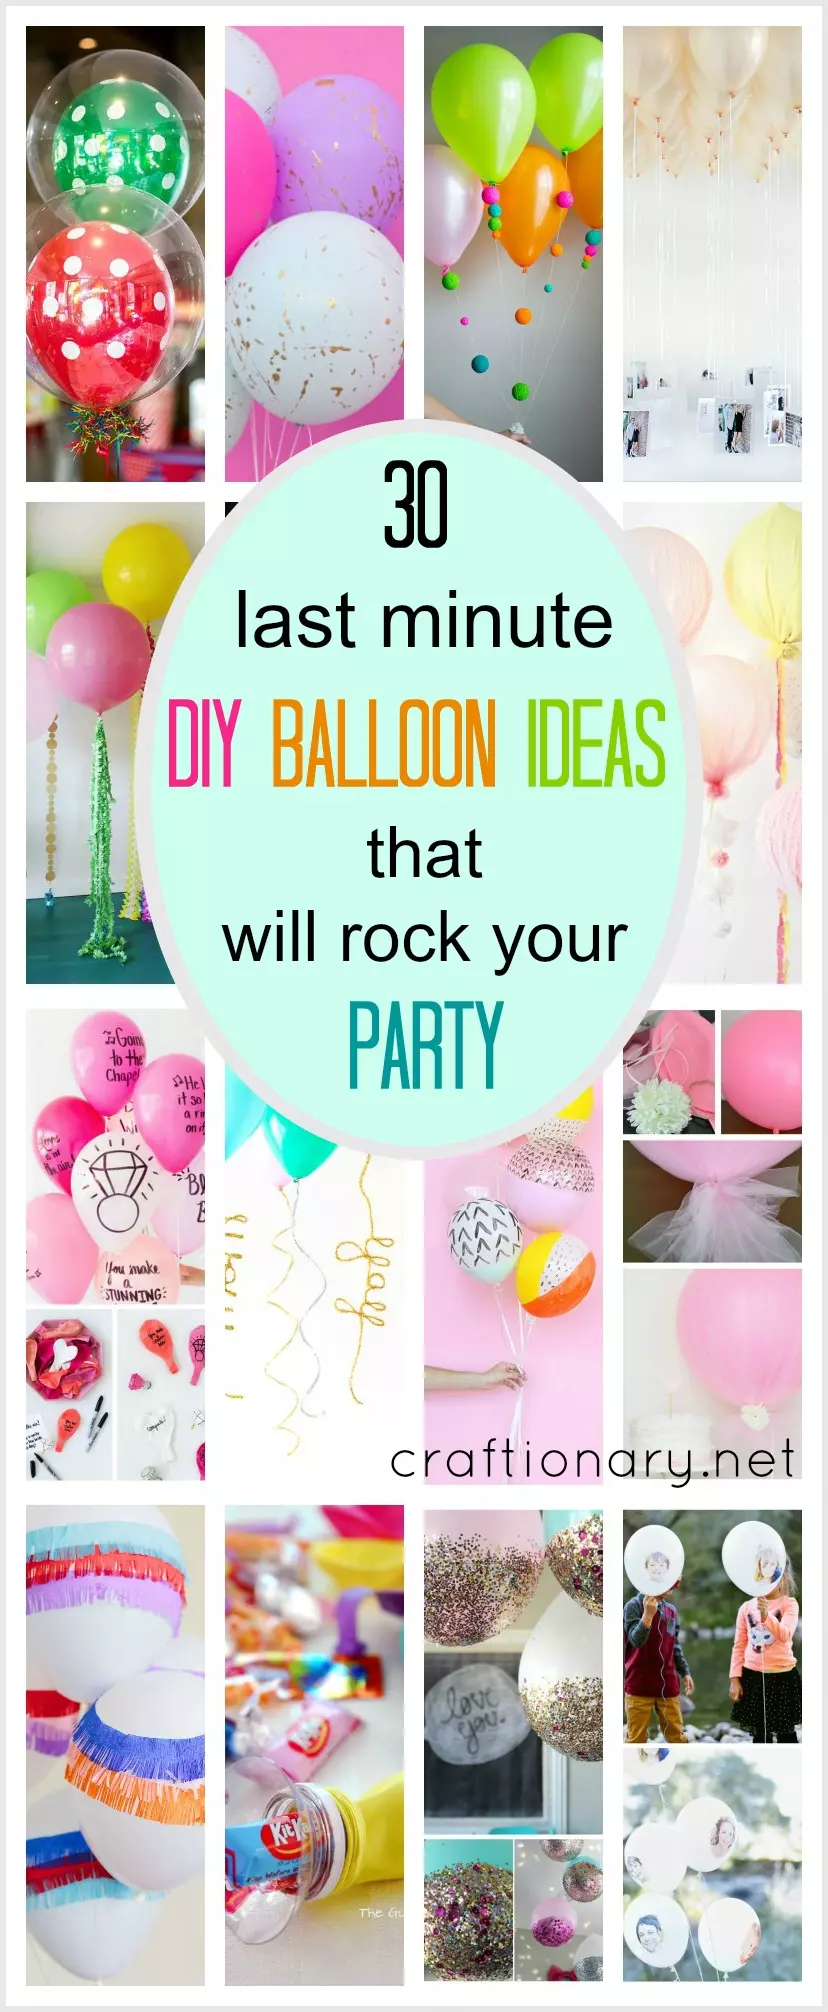 Creative Balloons Ideas For Parties